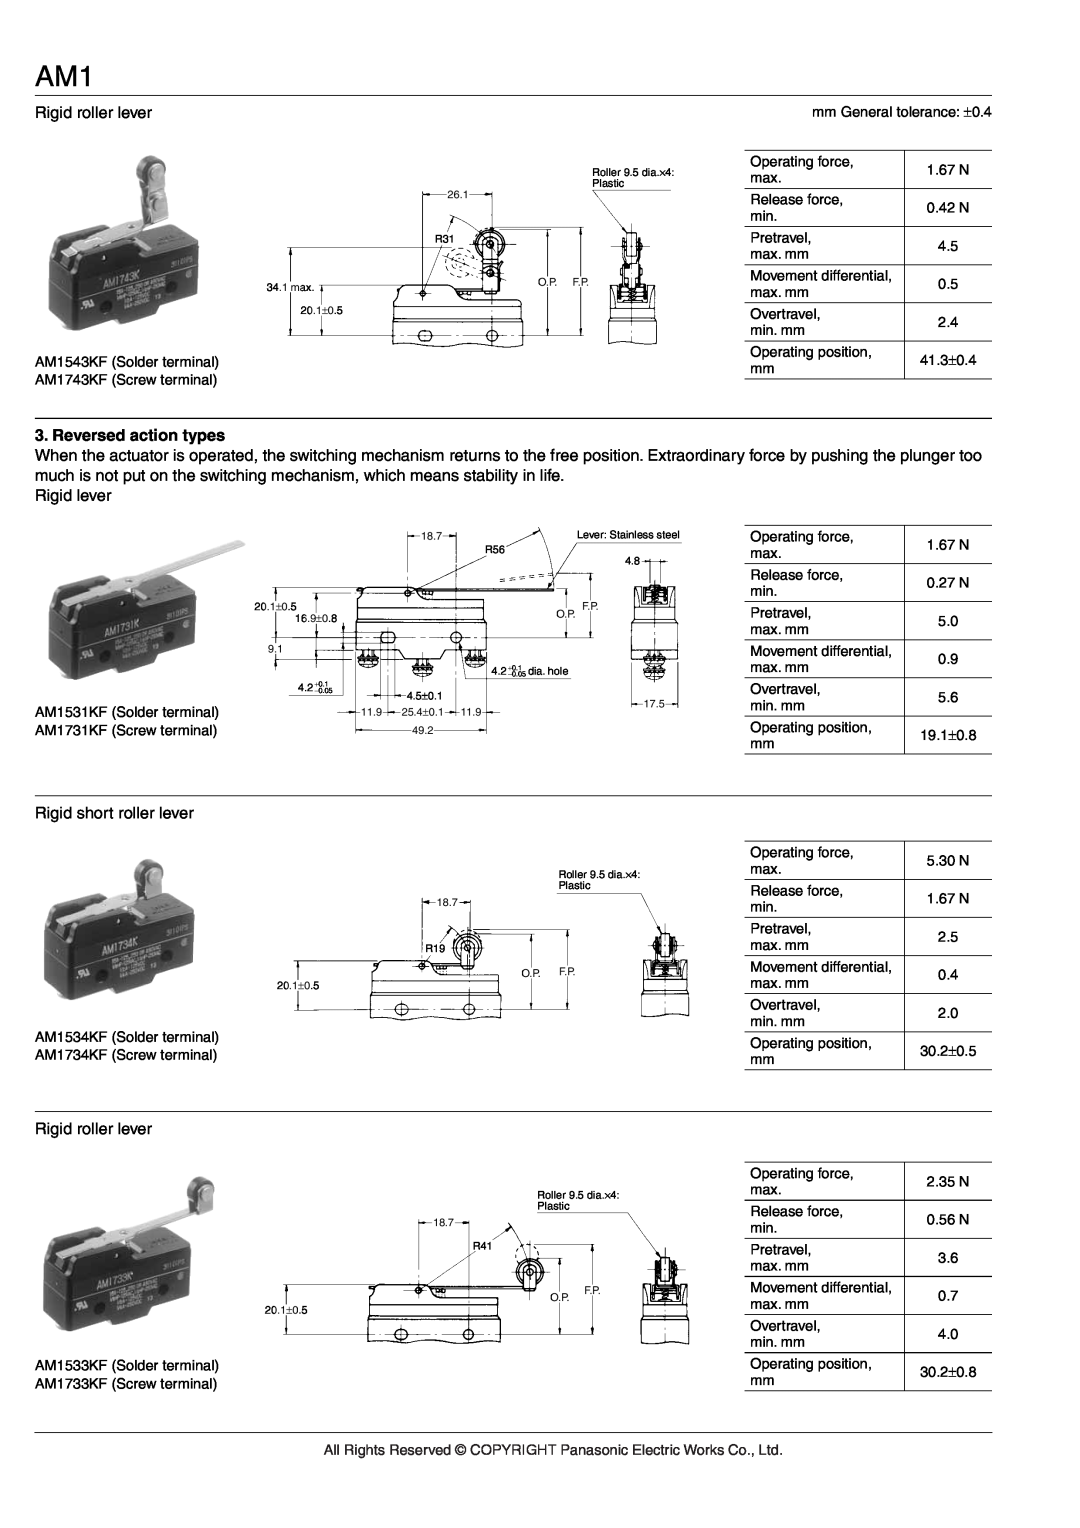 Panasonic AM1 (NZ BASIC) Rigid roller lever, Reversed action types, Rigid lever, Rigid short roller lever, 4.2 −+0.050.1 